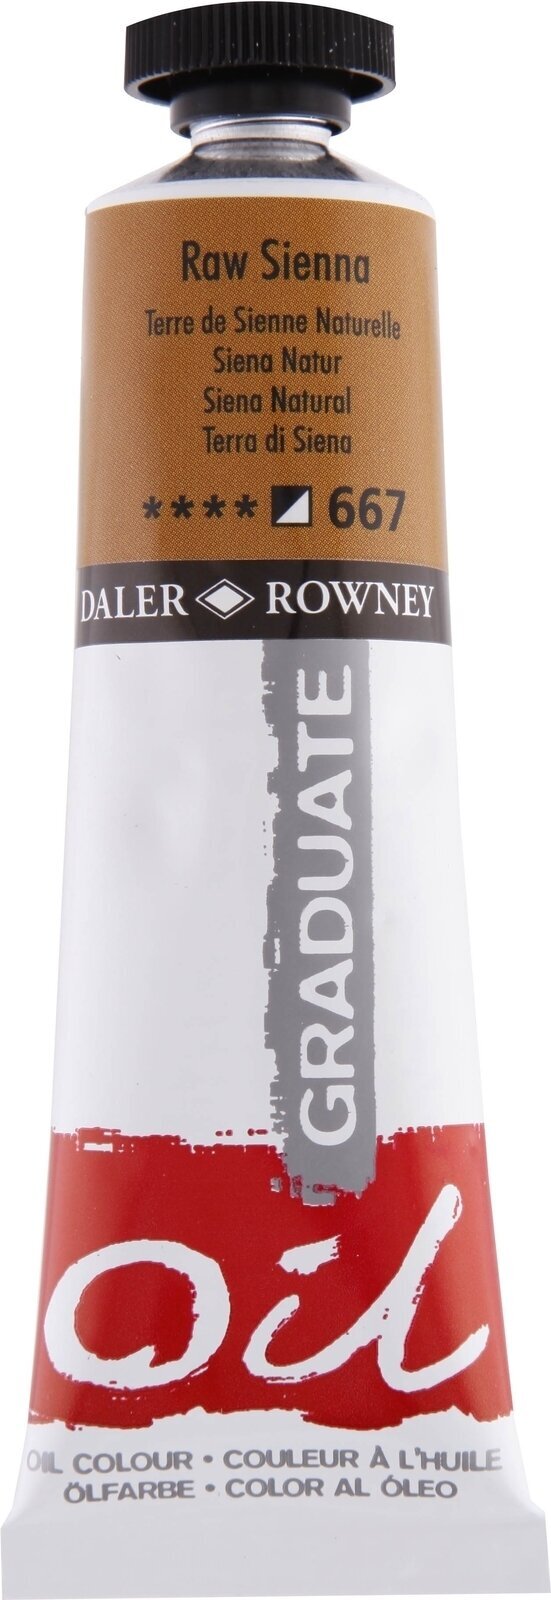 Oil colour Daler Rowney Graduate Oil Paint Raw Sienna 38 ml 1 pc